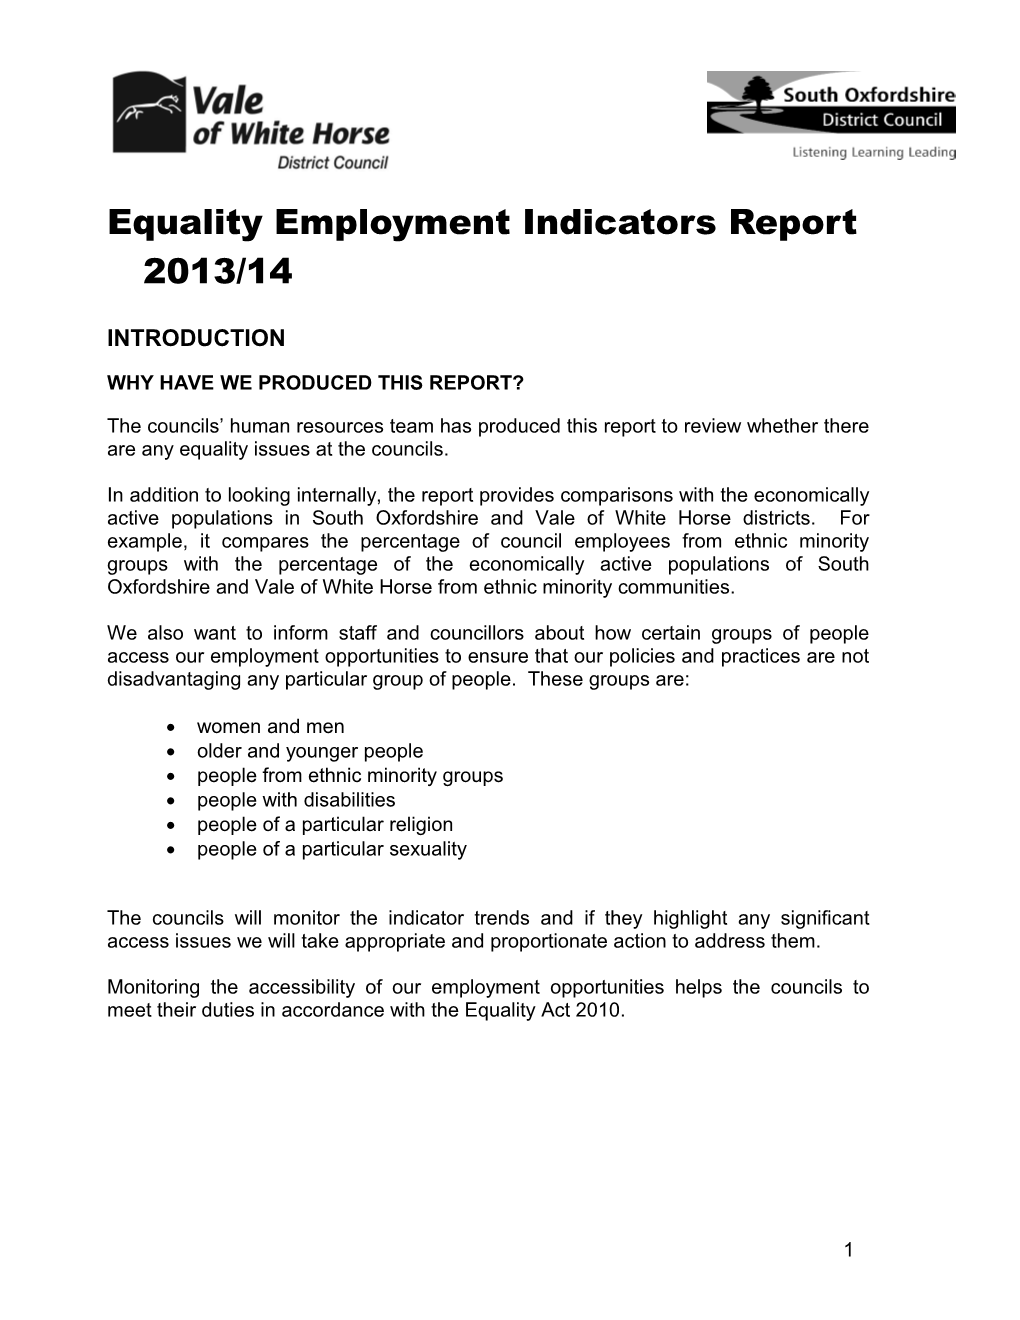 Equality Employment Indicators Report 2013/14